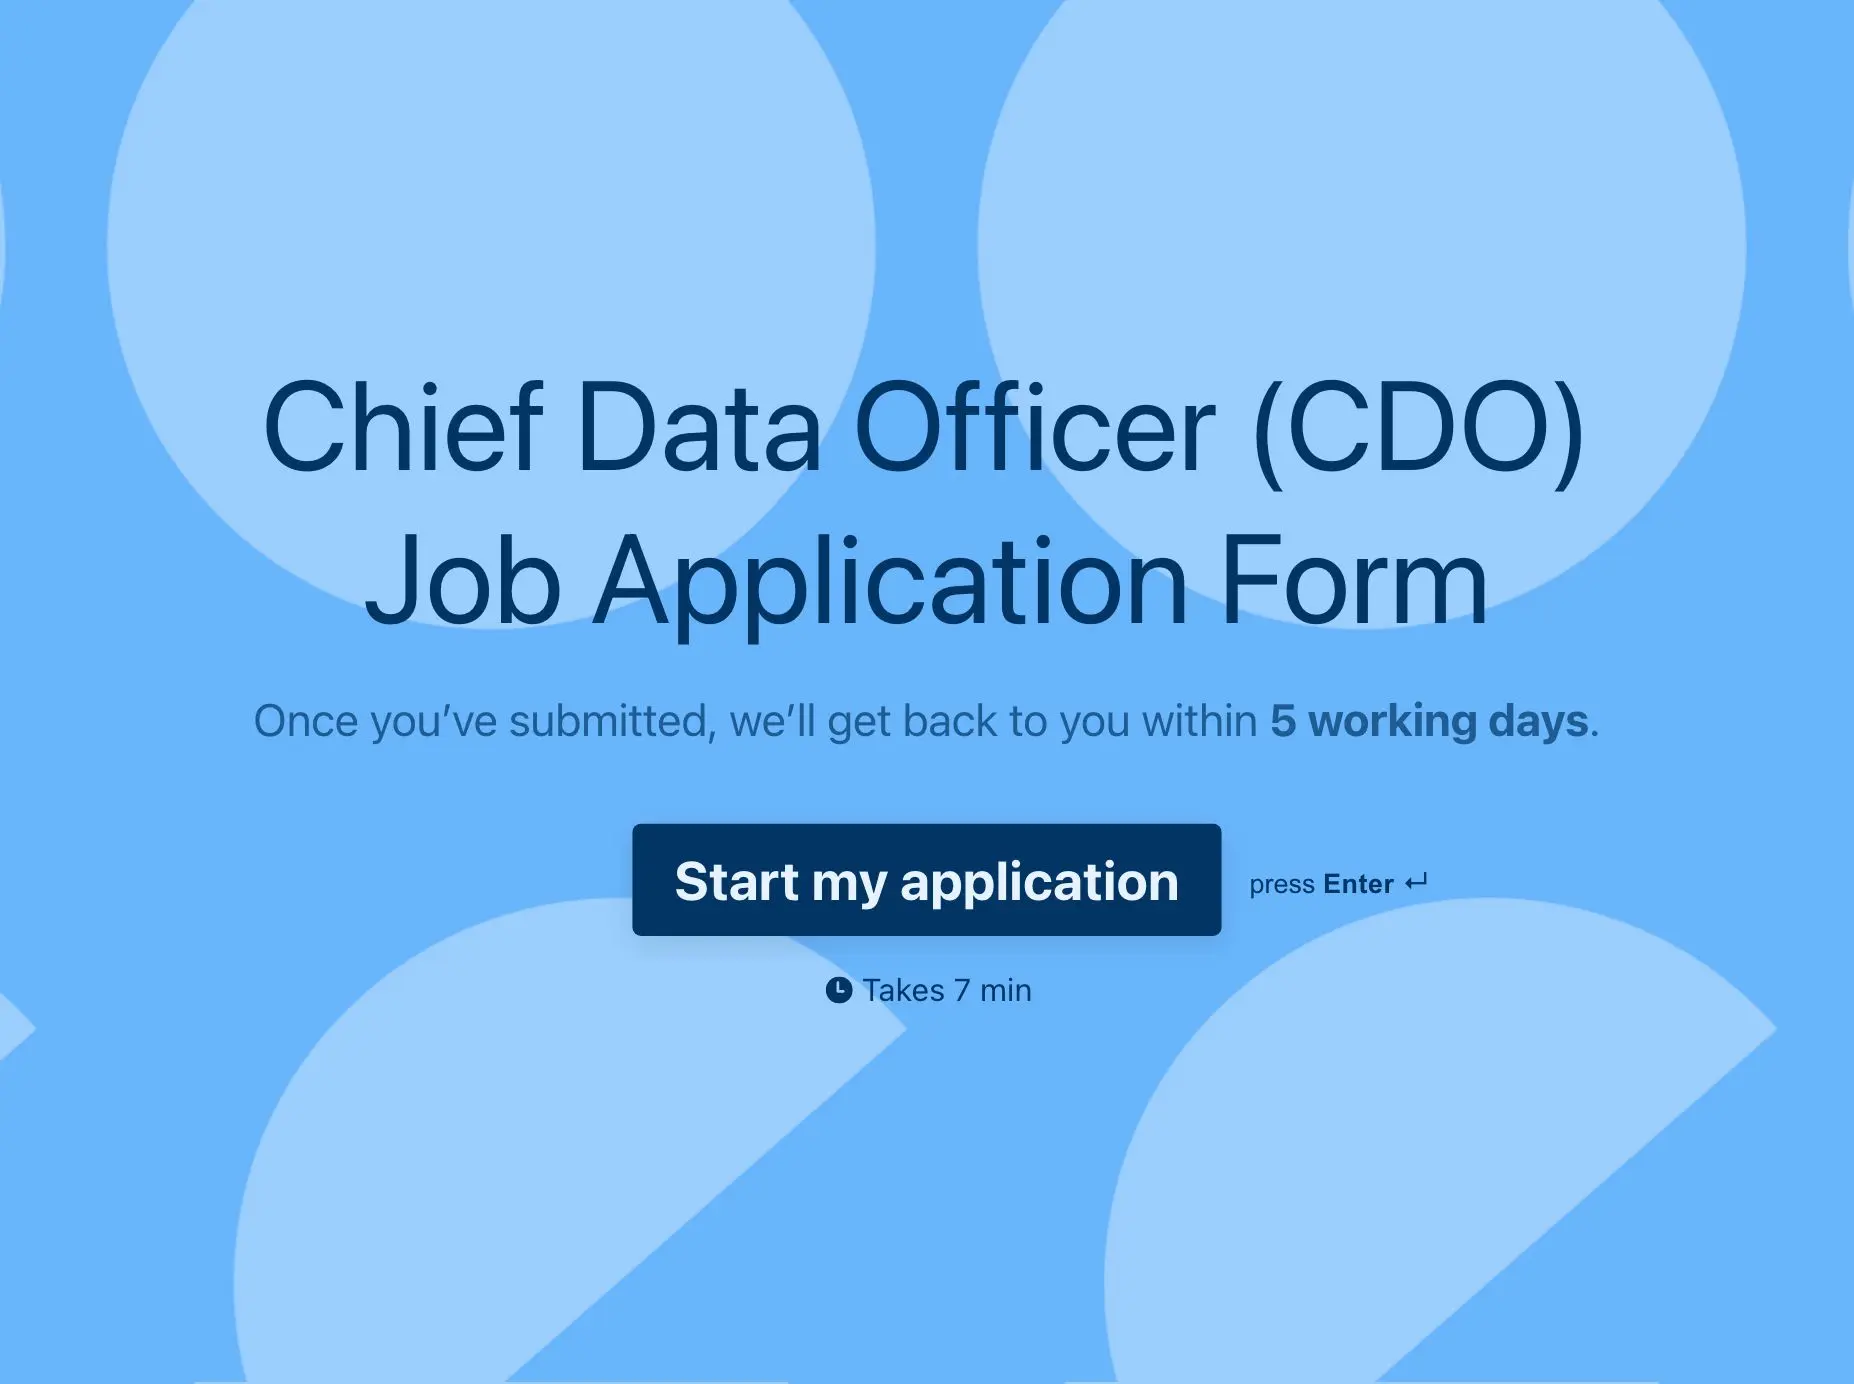 Chief Data Officer (CDO) Job Application Form Template Hero